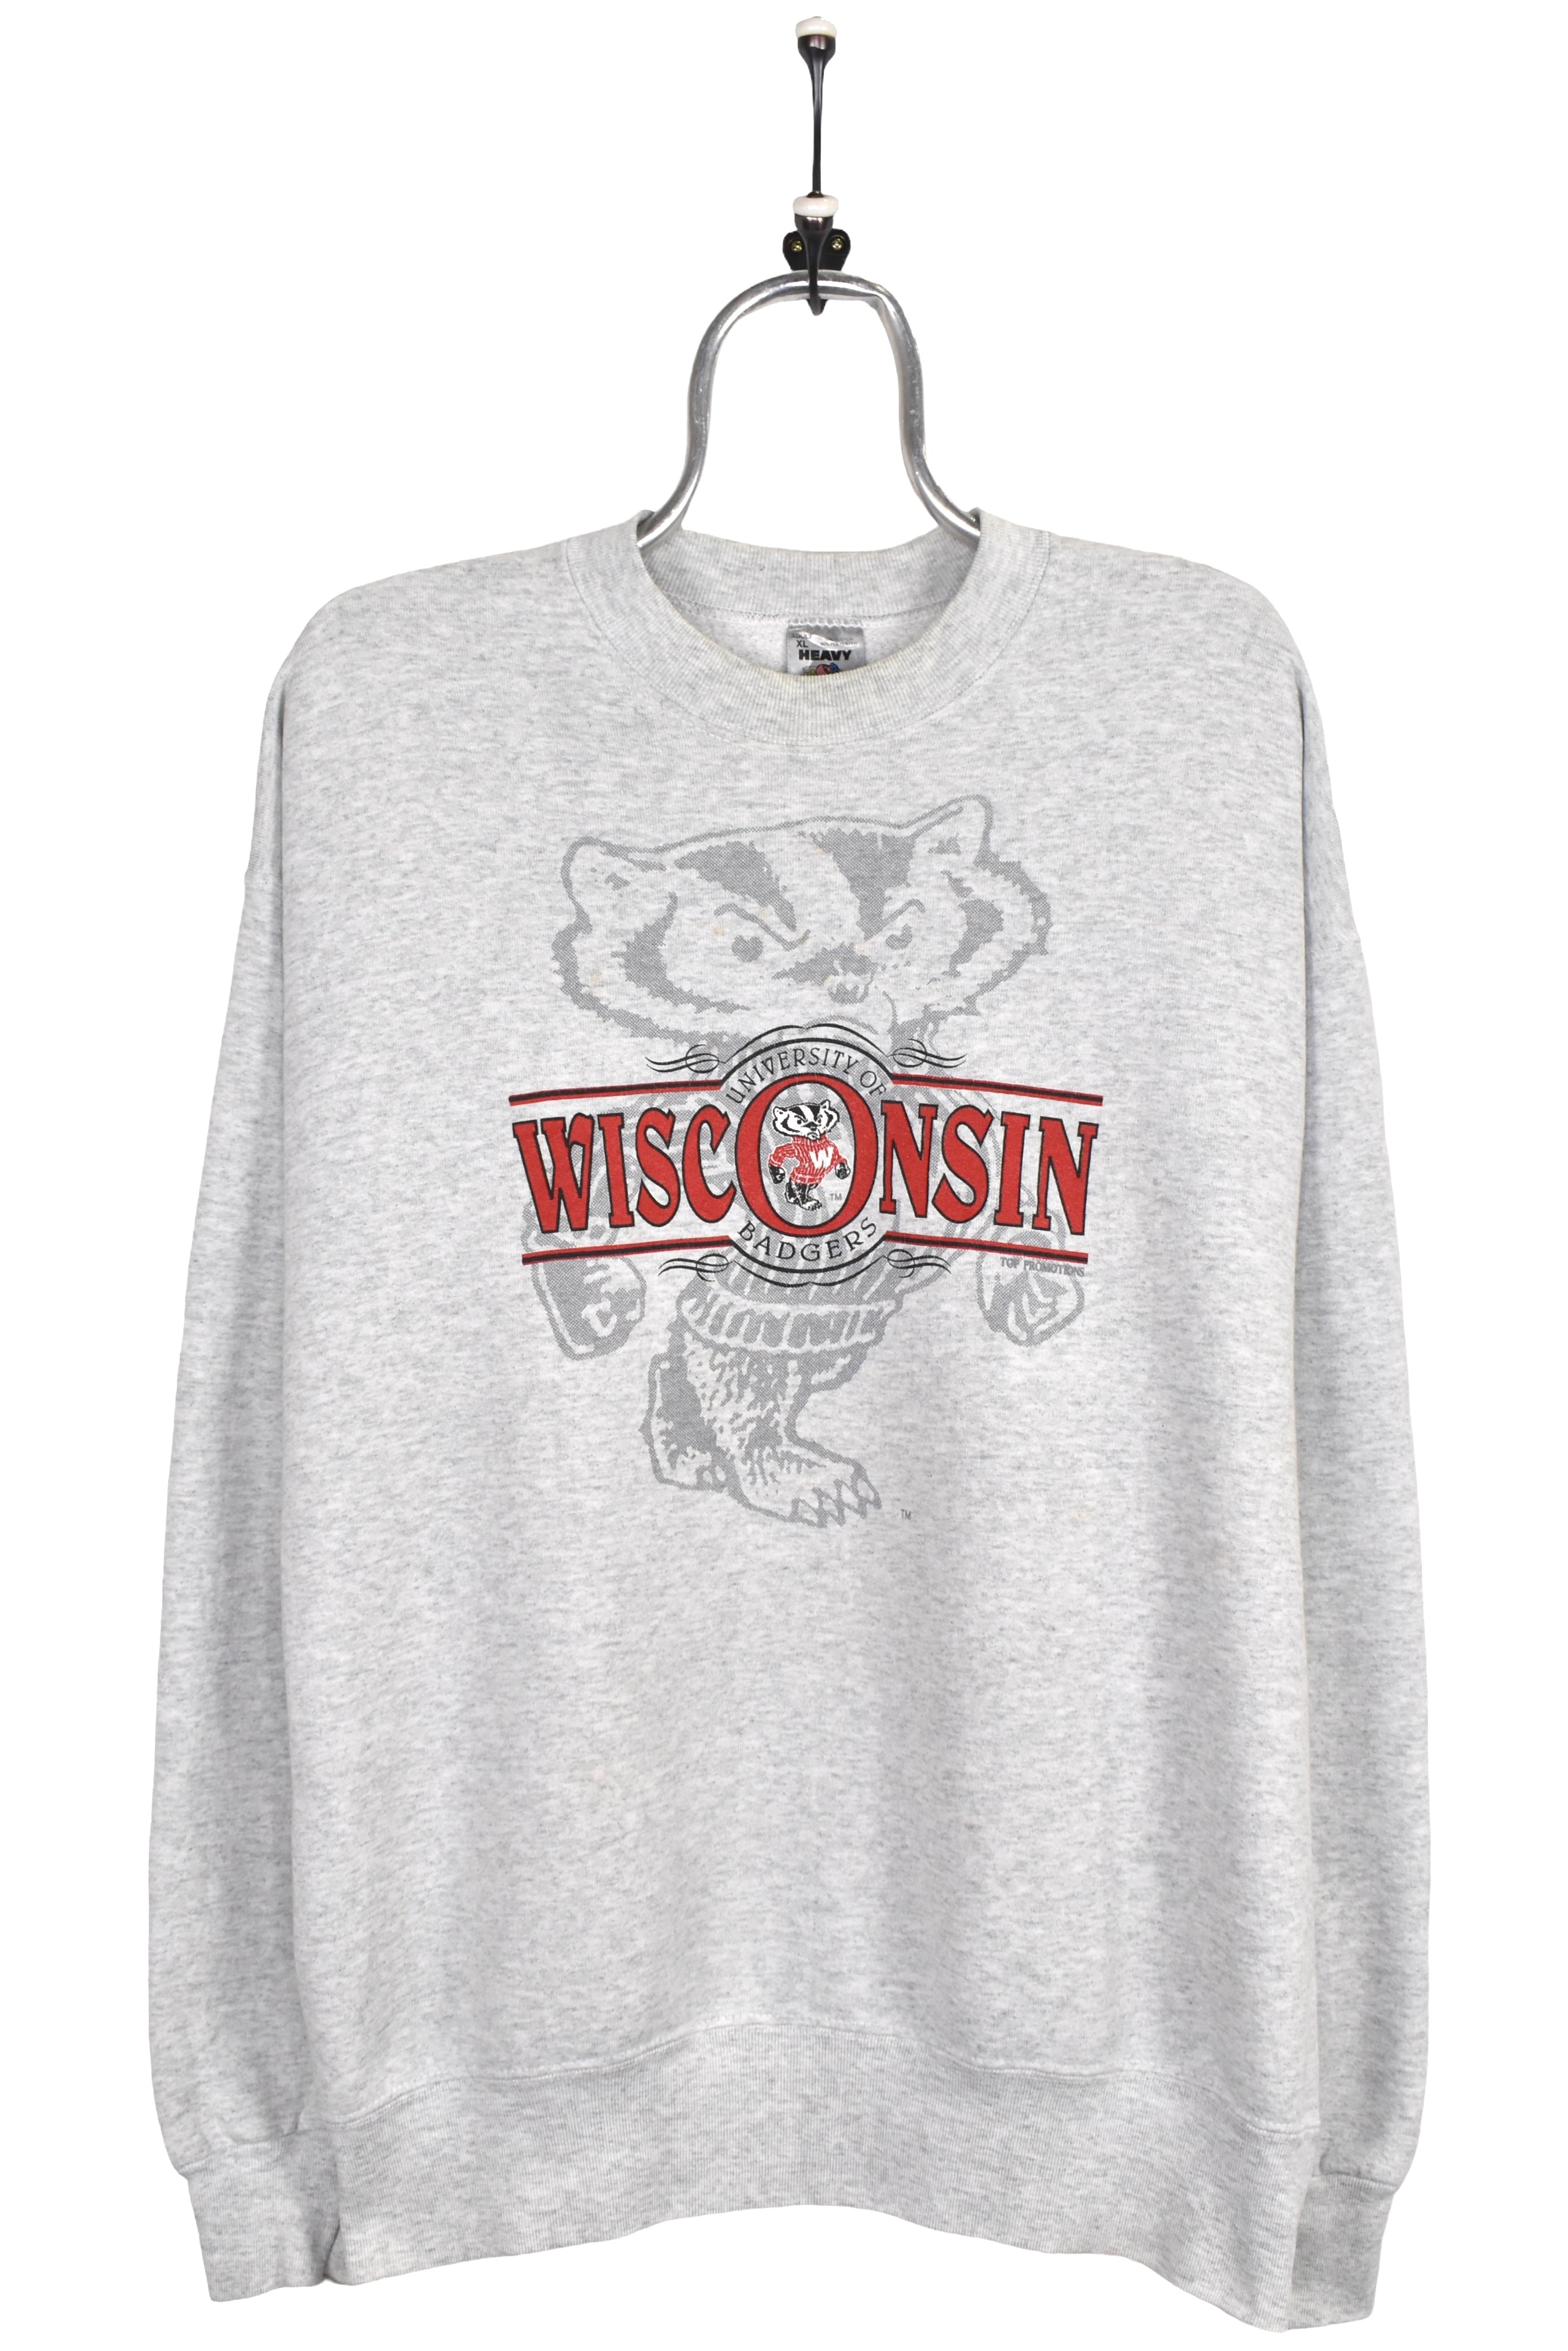 Vintage University of Wisconsin sweatshirt, grey Badgers crewneck - XL